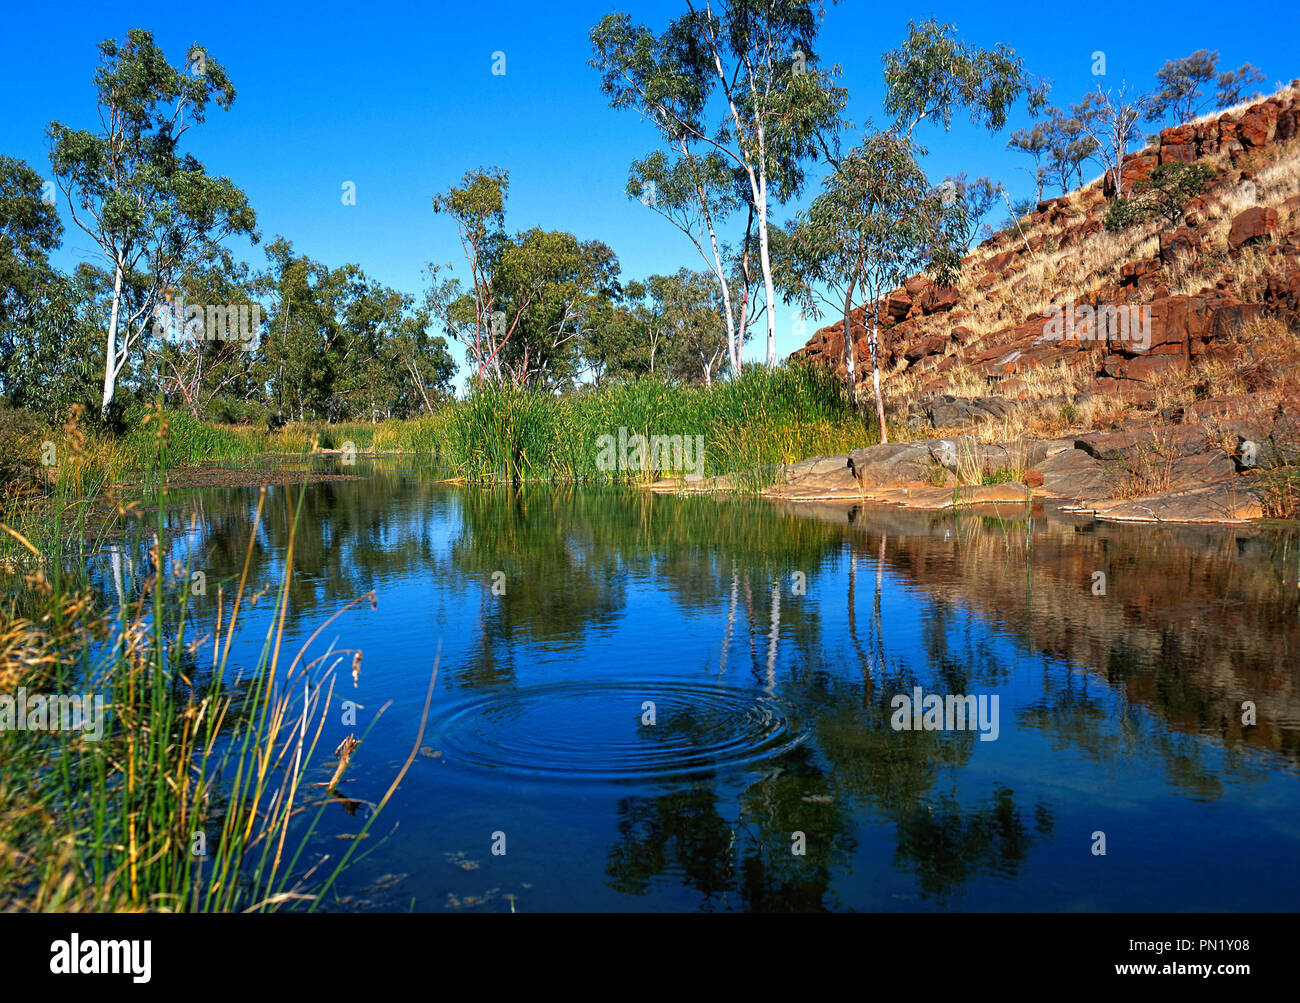 Billabong, Pilbara, Northwest Australia Stock Photo - Alamy